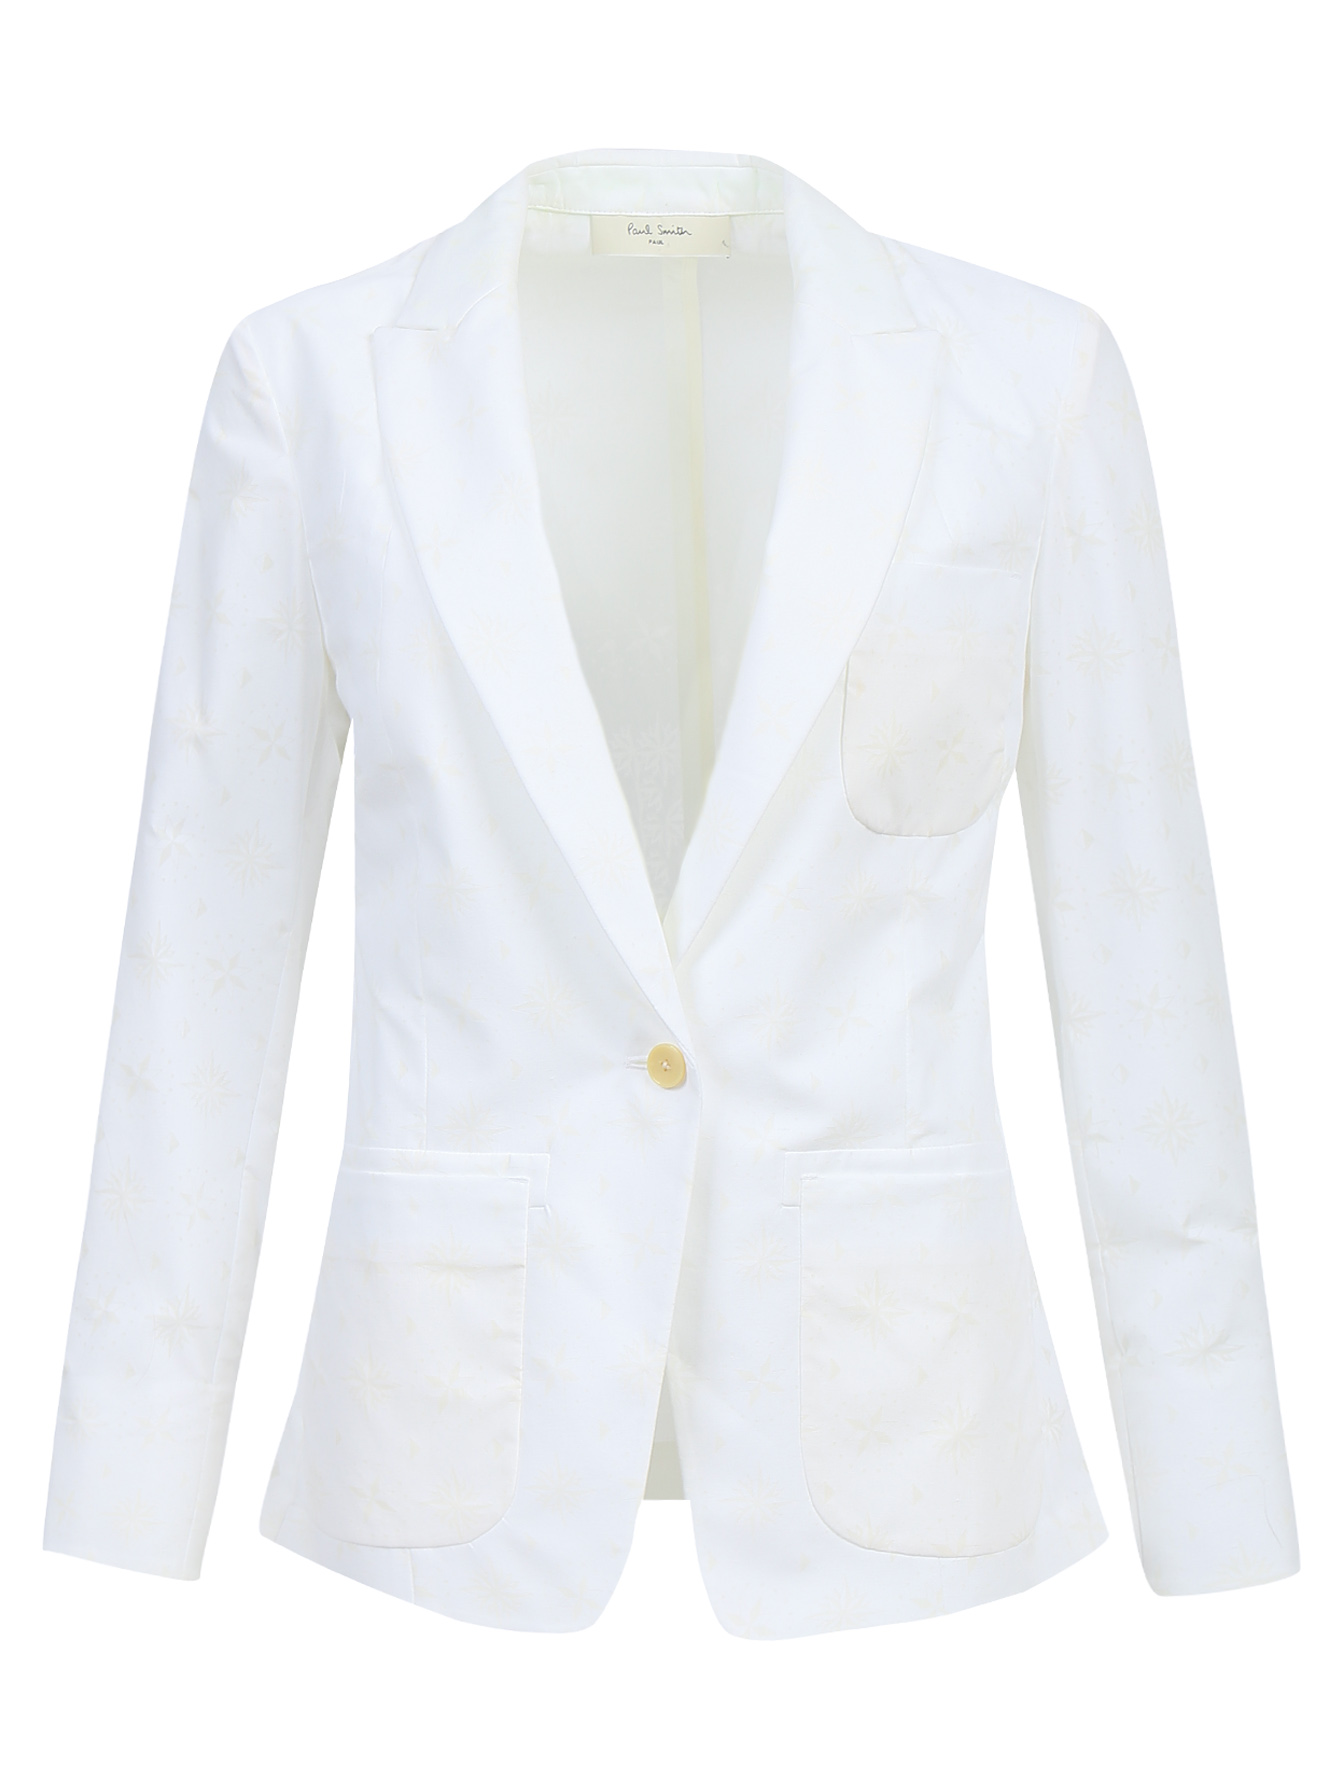 MARCCAIN Sports белый жакет пиджак YS 34.16 j70 15642.1